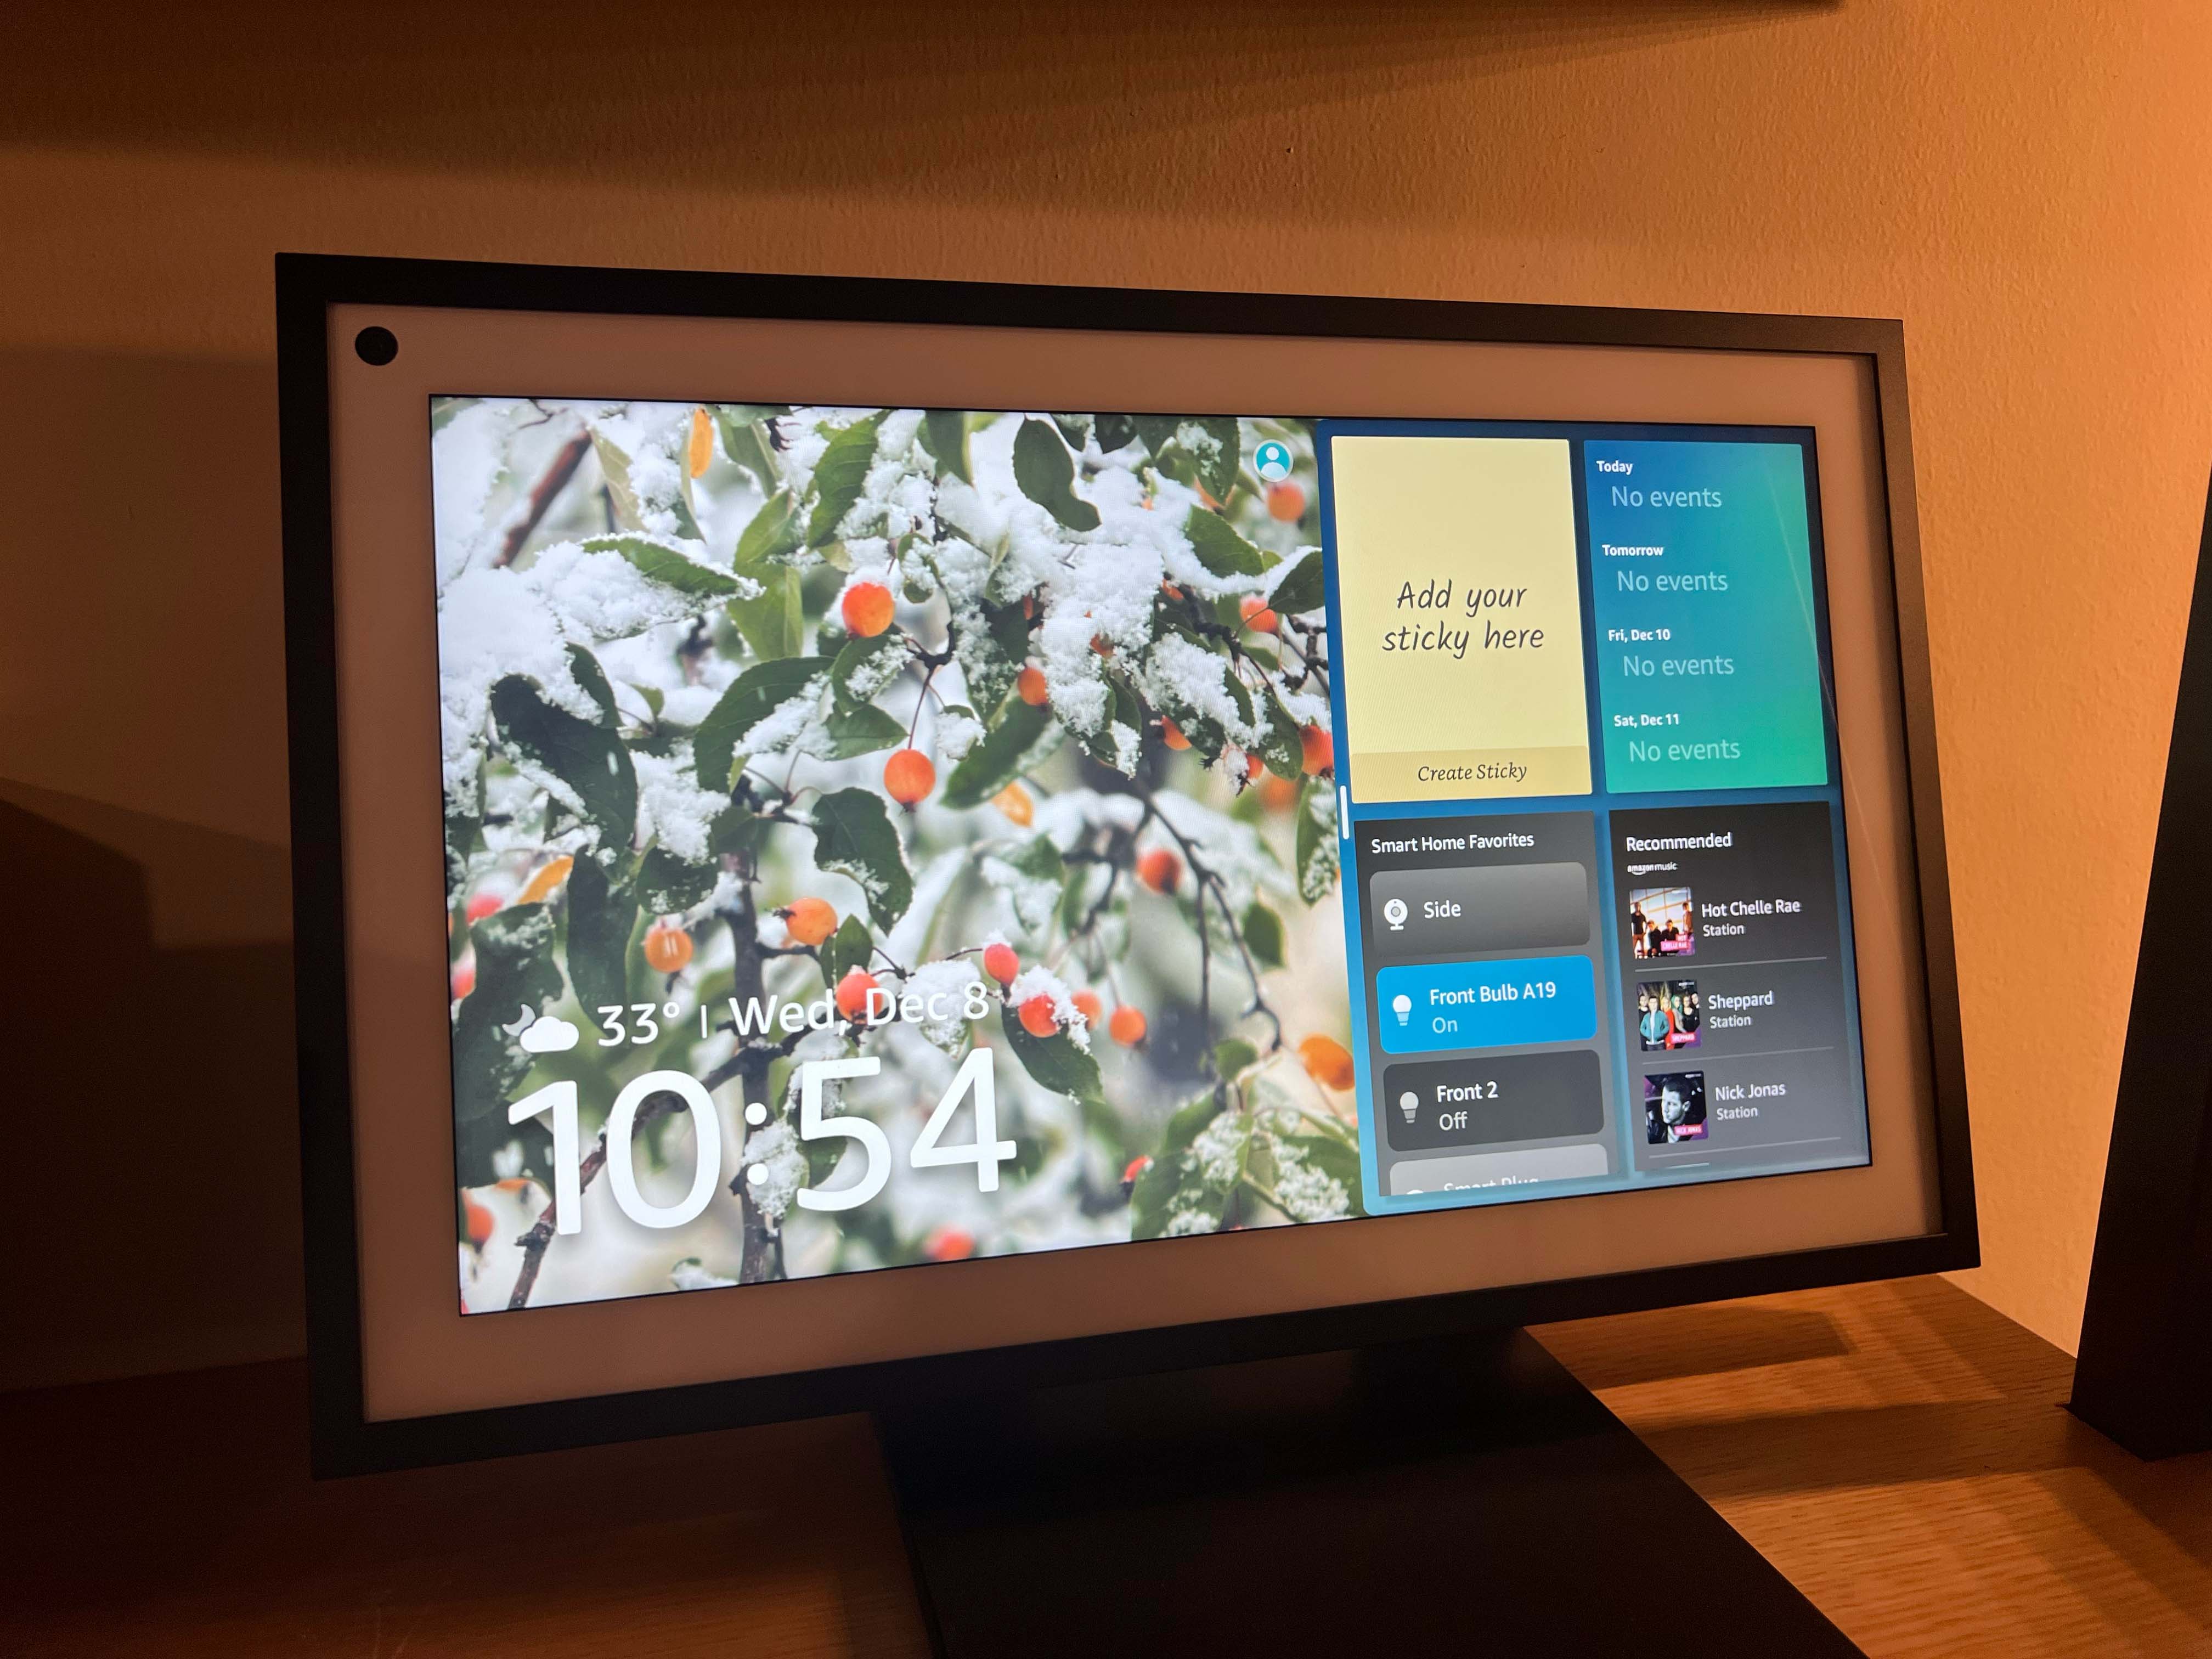 Echo Show 15 review: 's biggest Alexa smart display gets even better  - The Verge